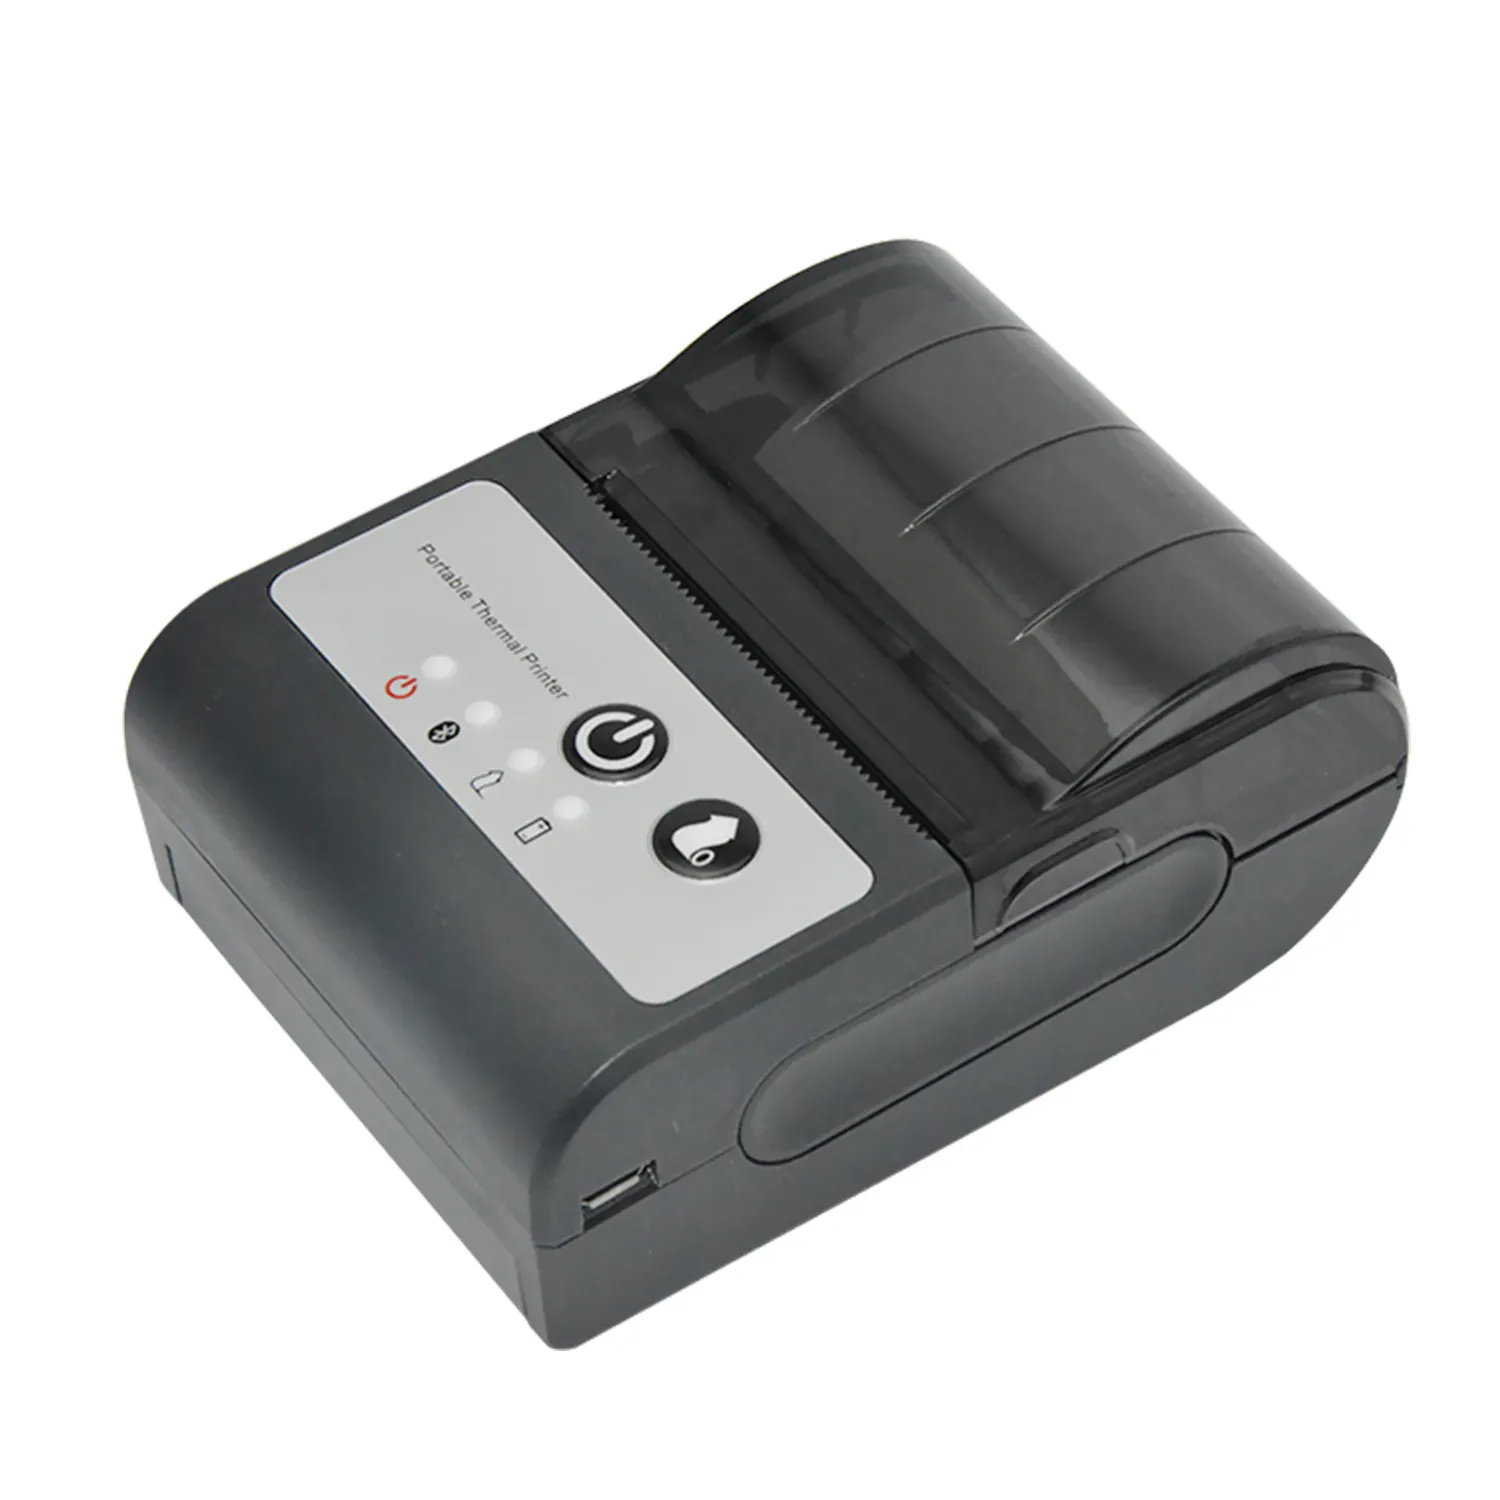 58mm Portable Bluetooth Printer Adroid Mobile Printer Mini Printer Free  with SDK + Belt Case